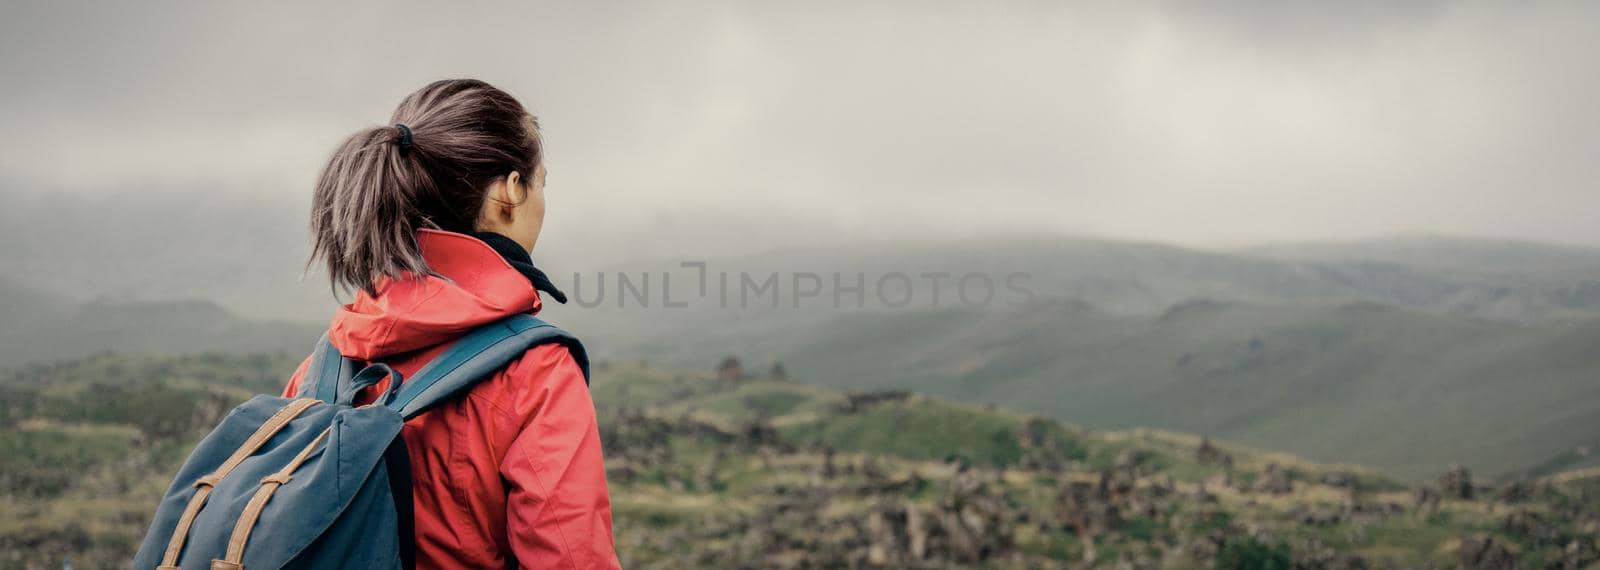 Explorer girl walking in the mountains. by alexAleksei